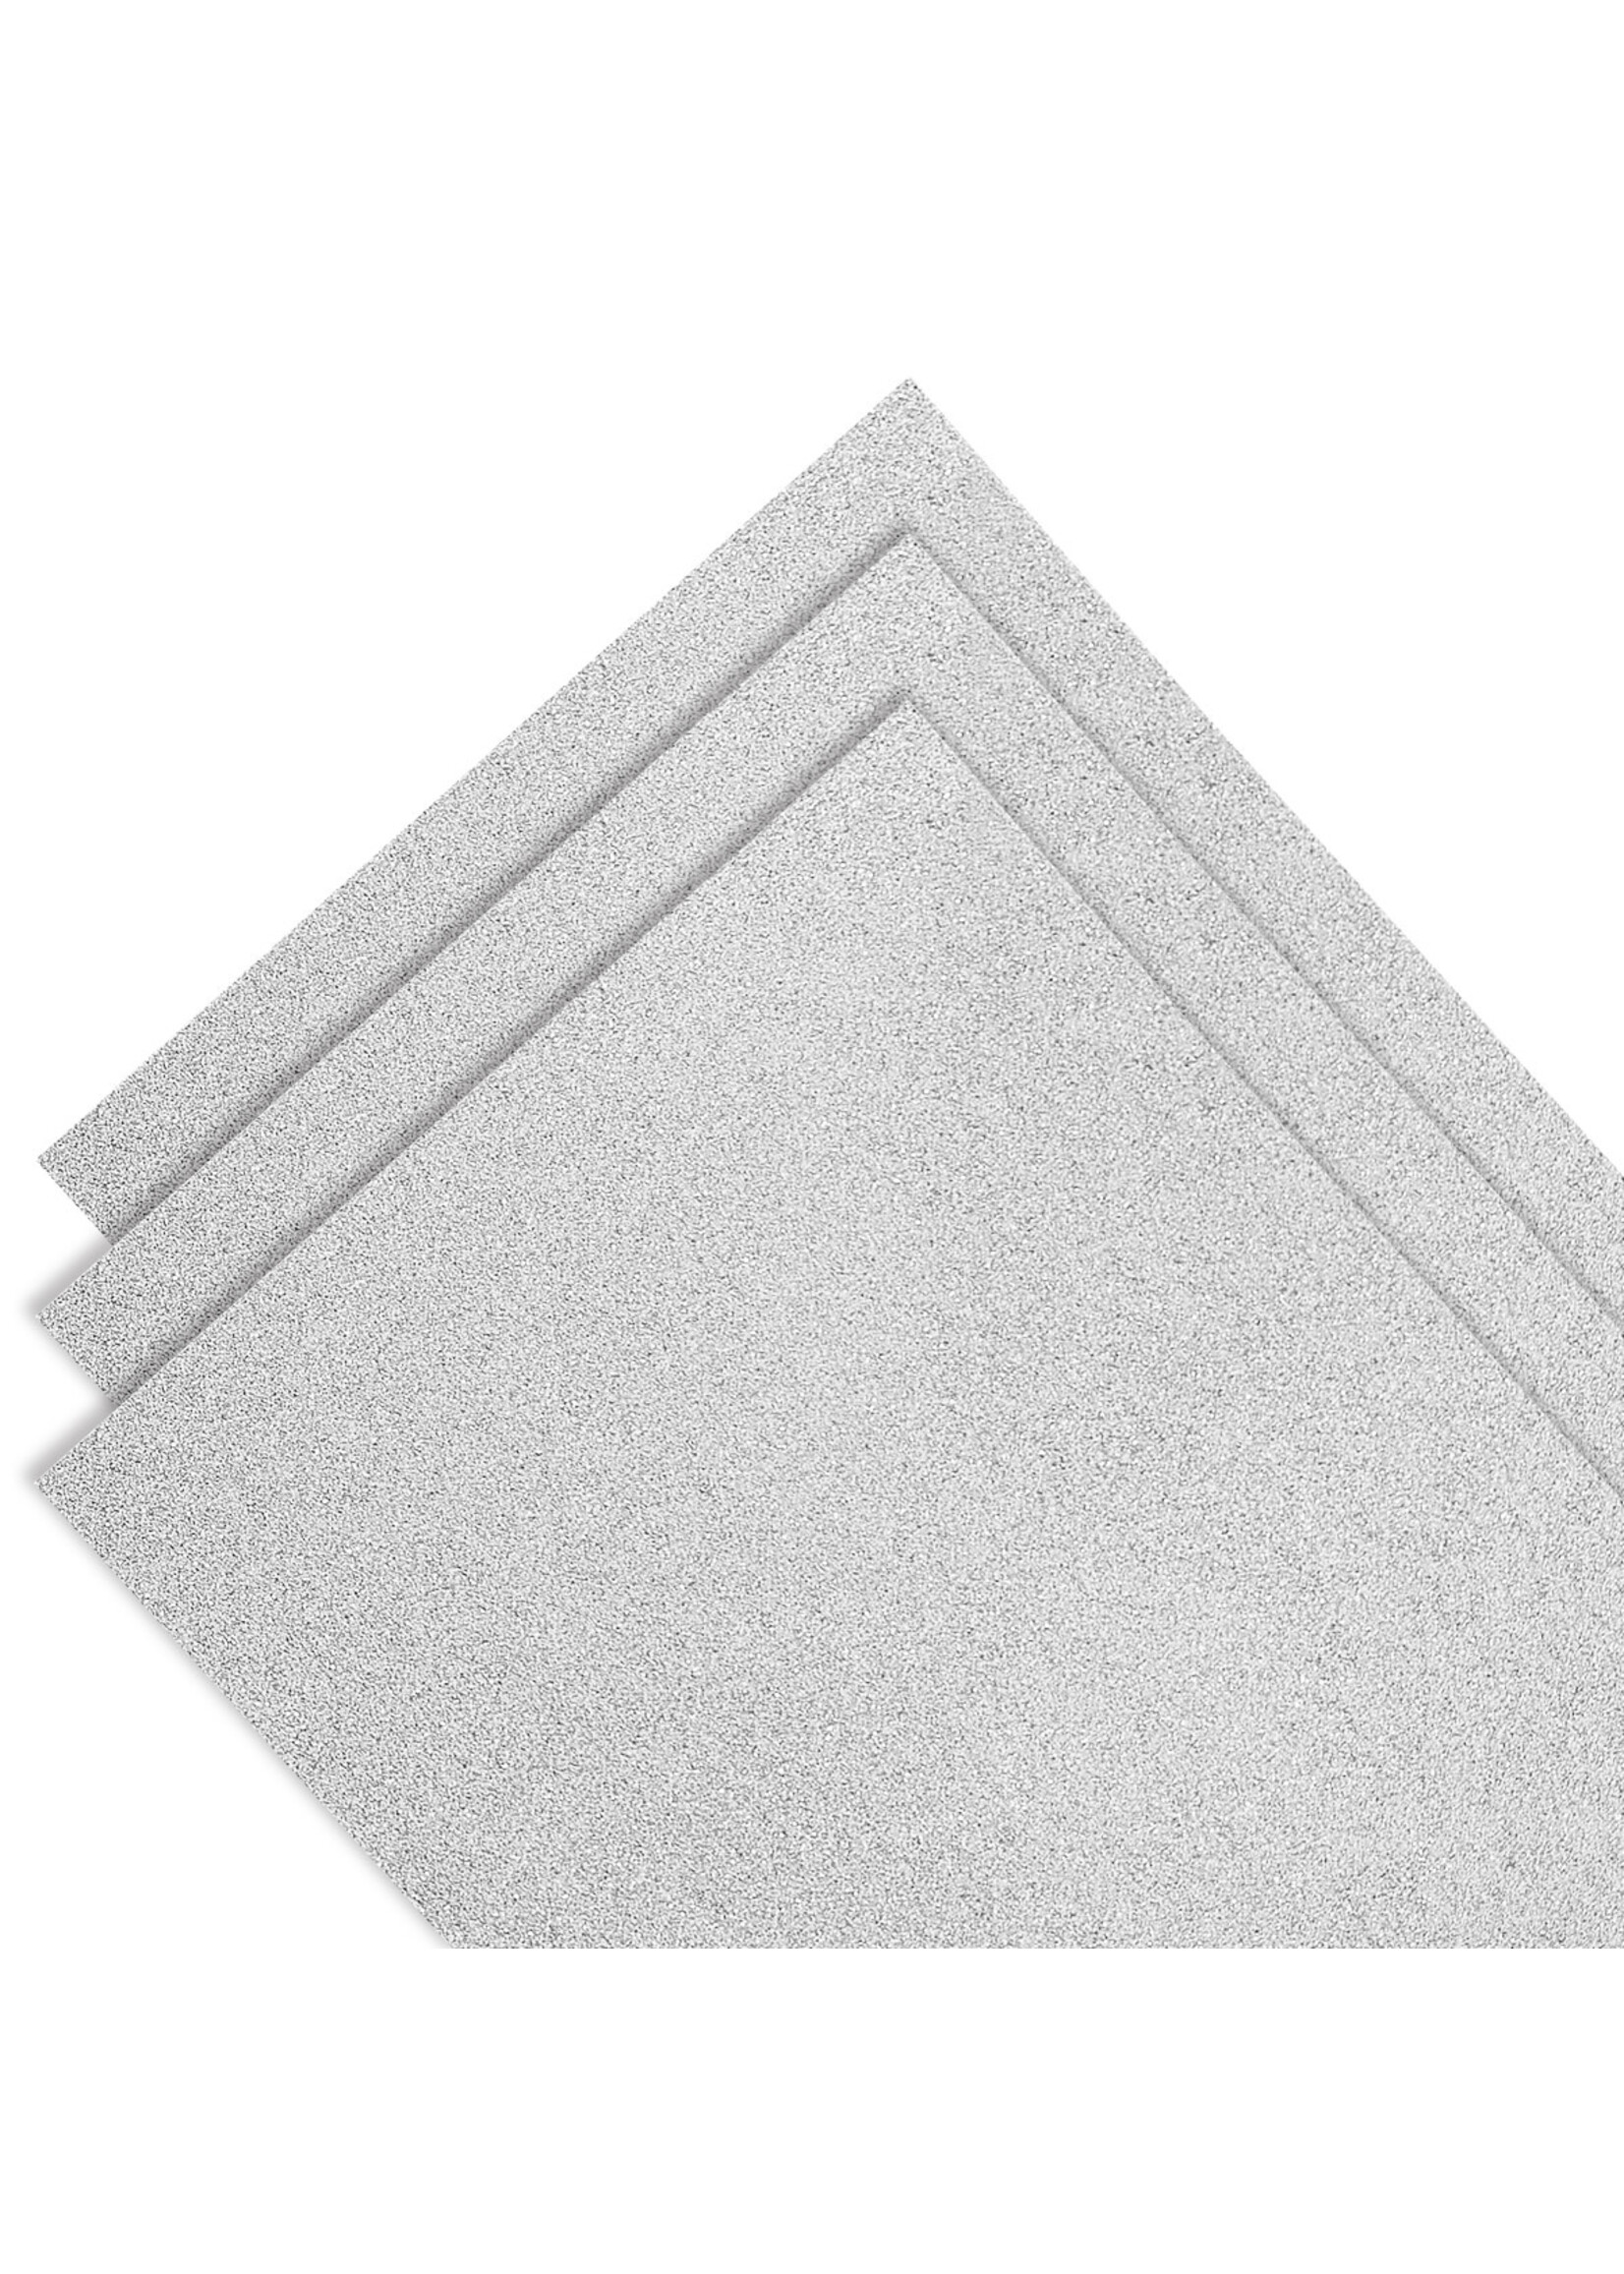 spellbinders Silver Glitter Cardstock 8.5 x 11" - 10 Sheets